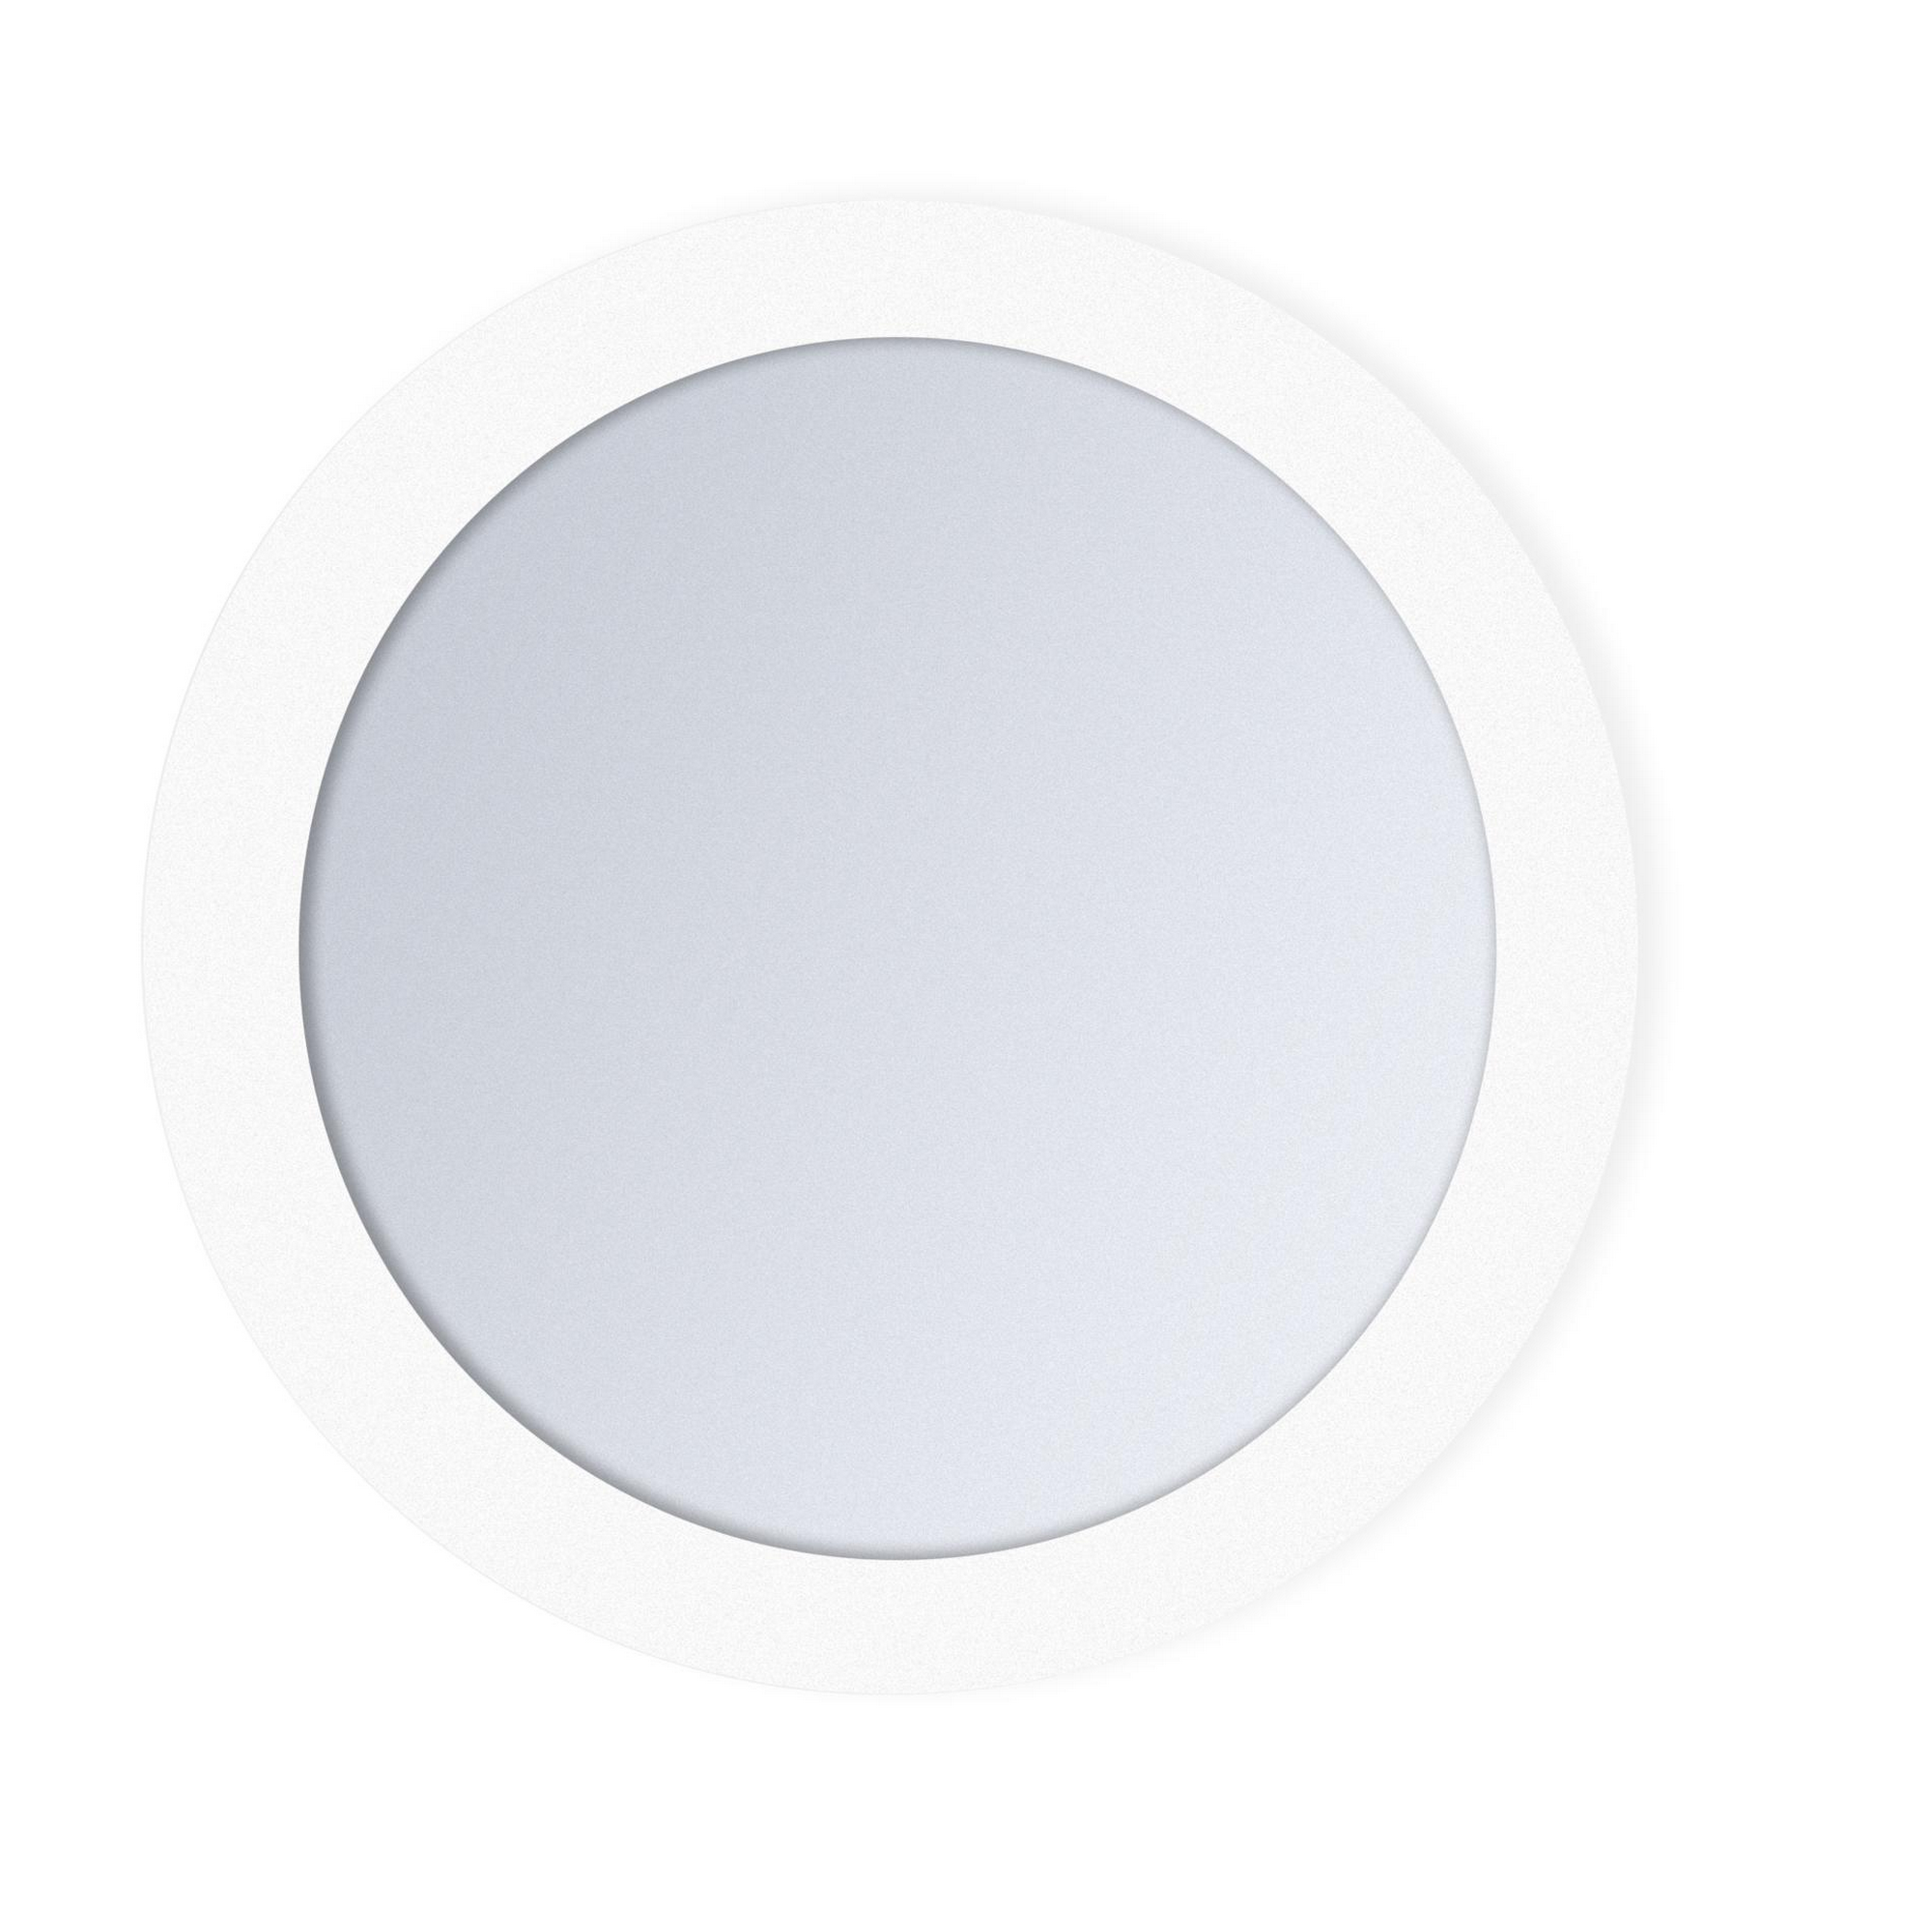 Kosmetikspiegel 'Mulan' weiß Ø 12,5 cm mit Saugnapf + product picture